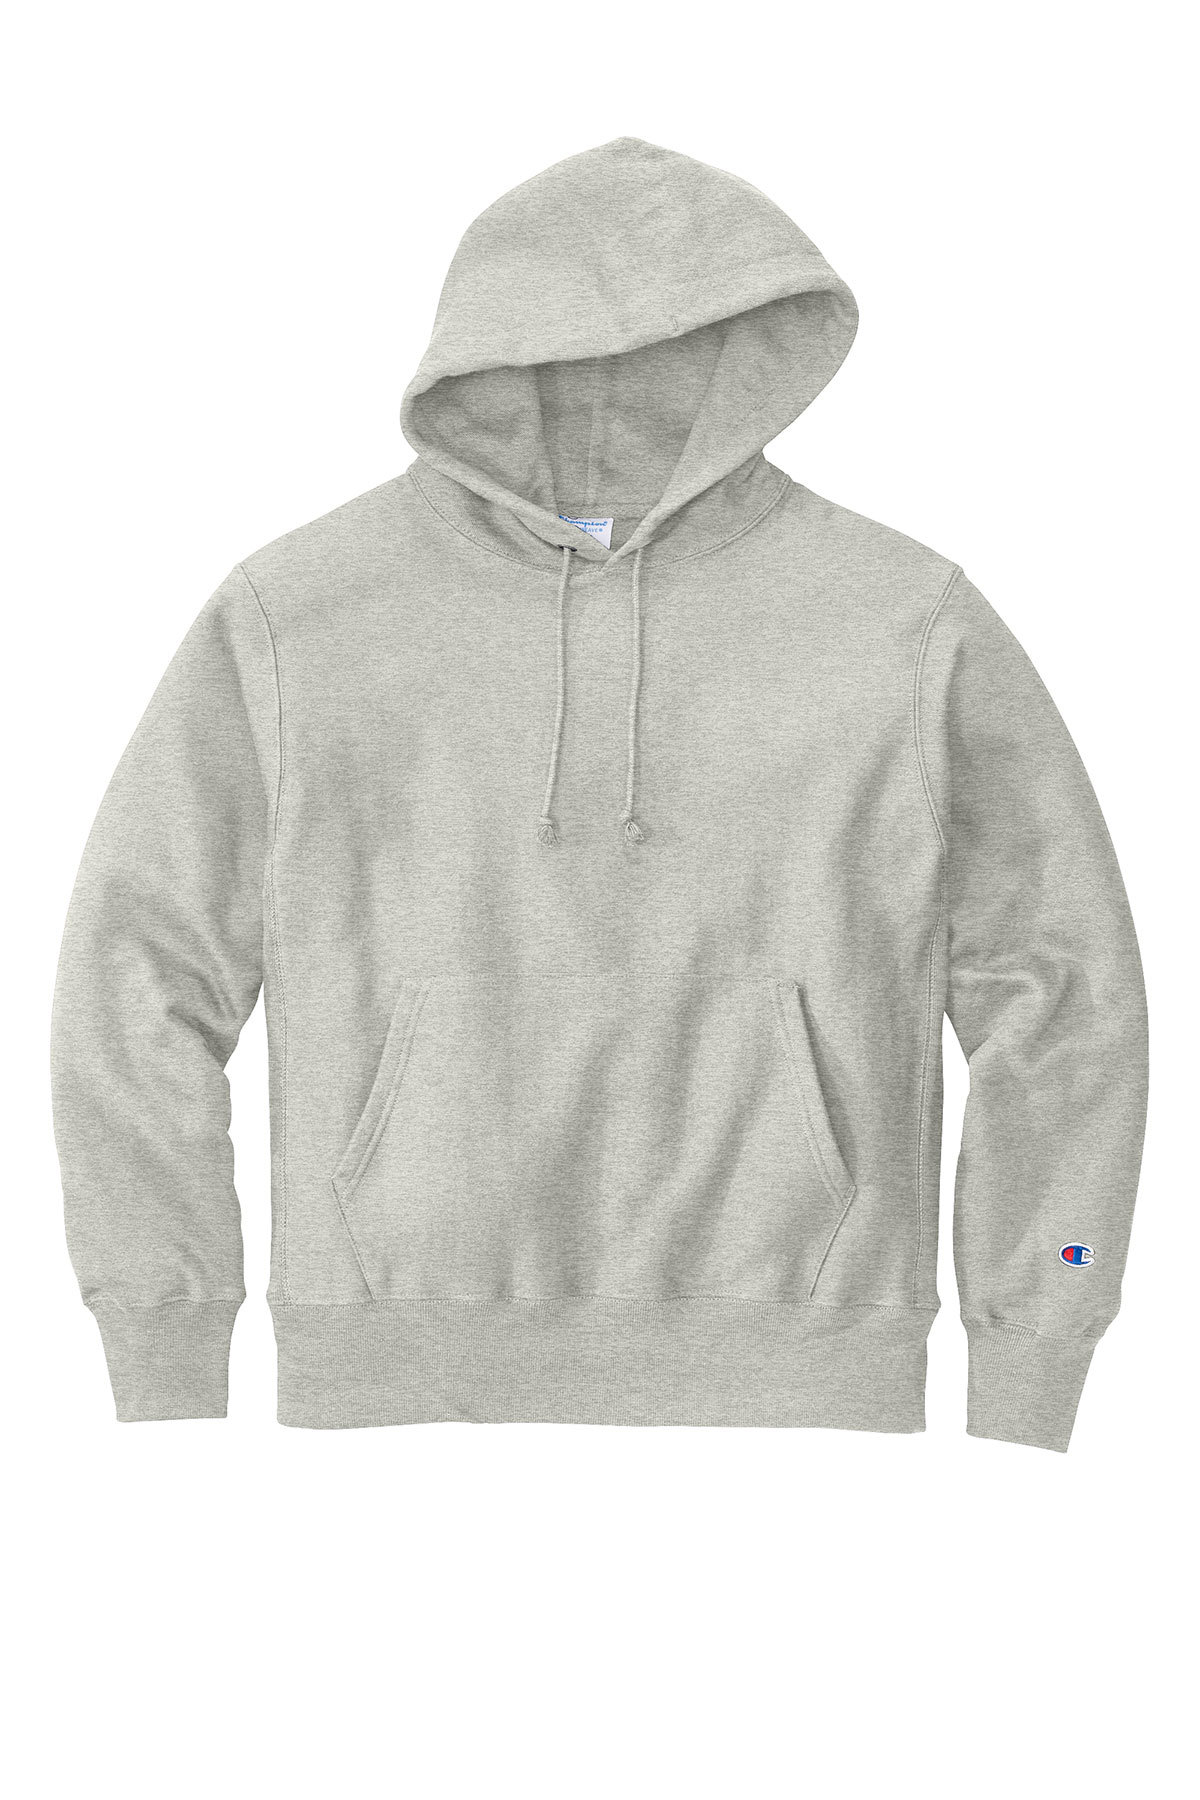 Product Sweatshirt | SanMar Champion Weave Hooded | Reverse